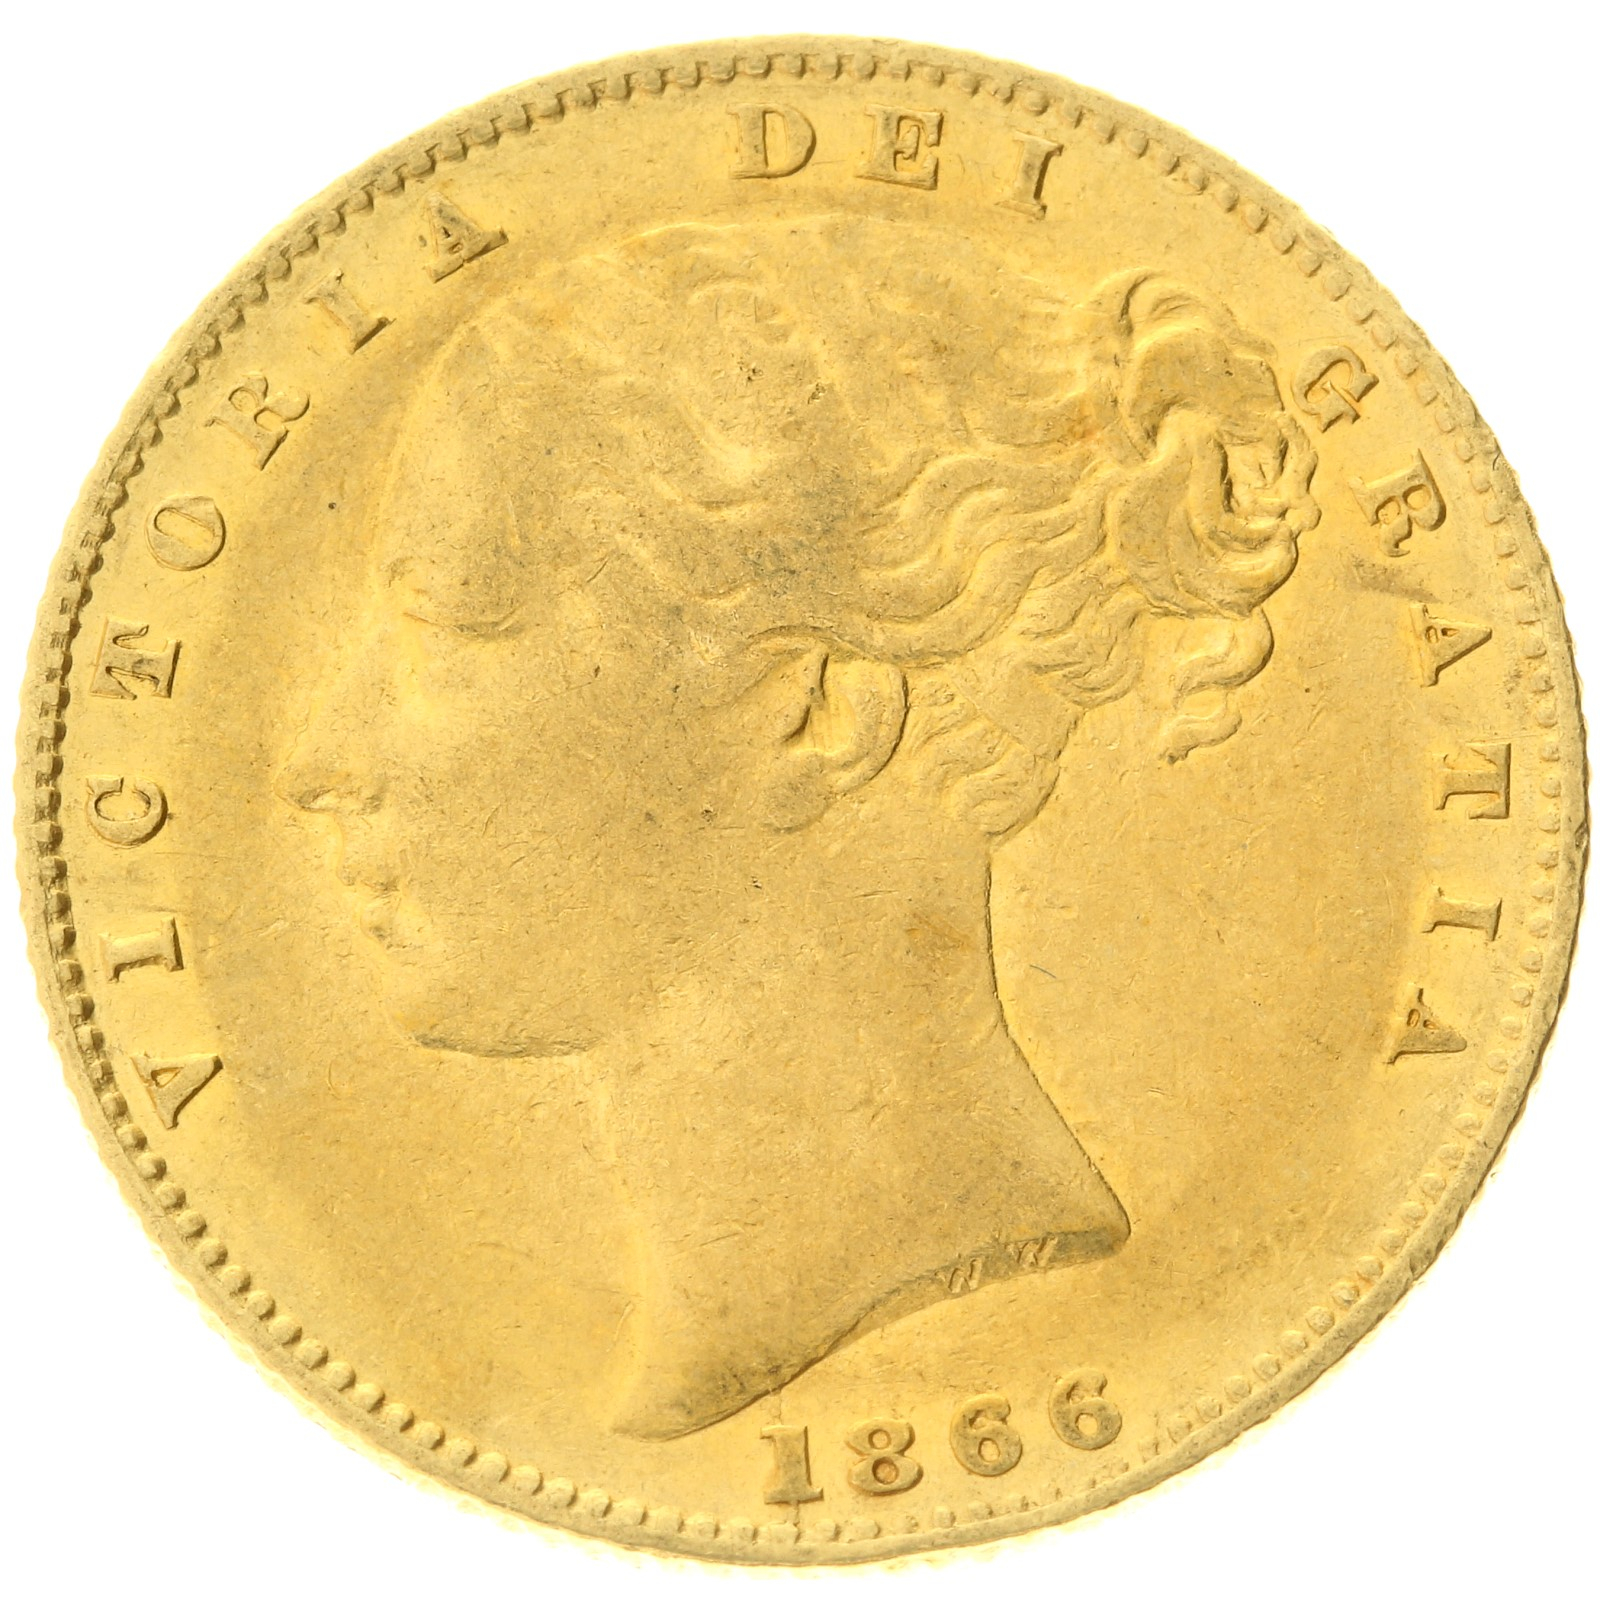 United Kingdom - 1 Sovereign - 1866 - Victoria 